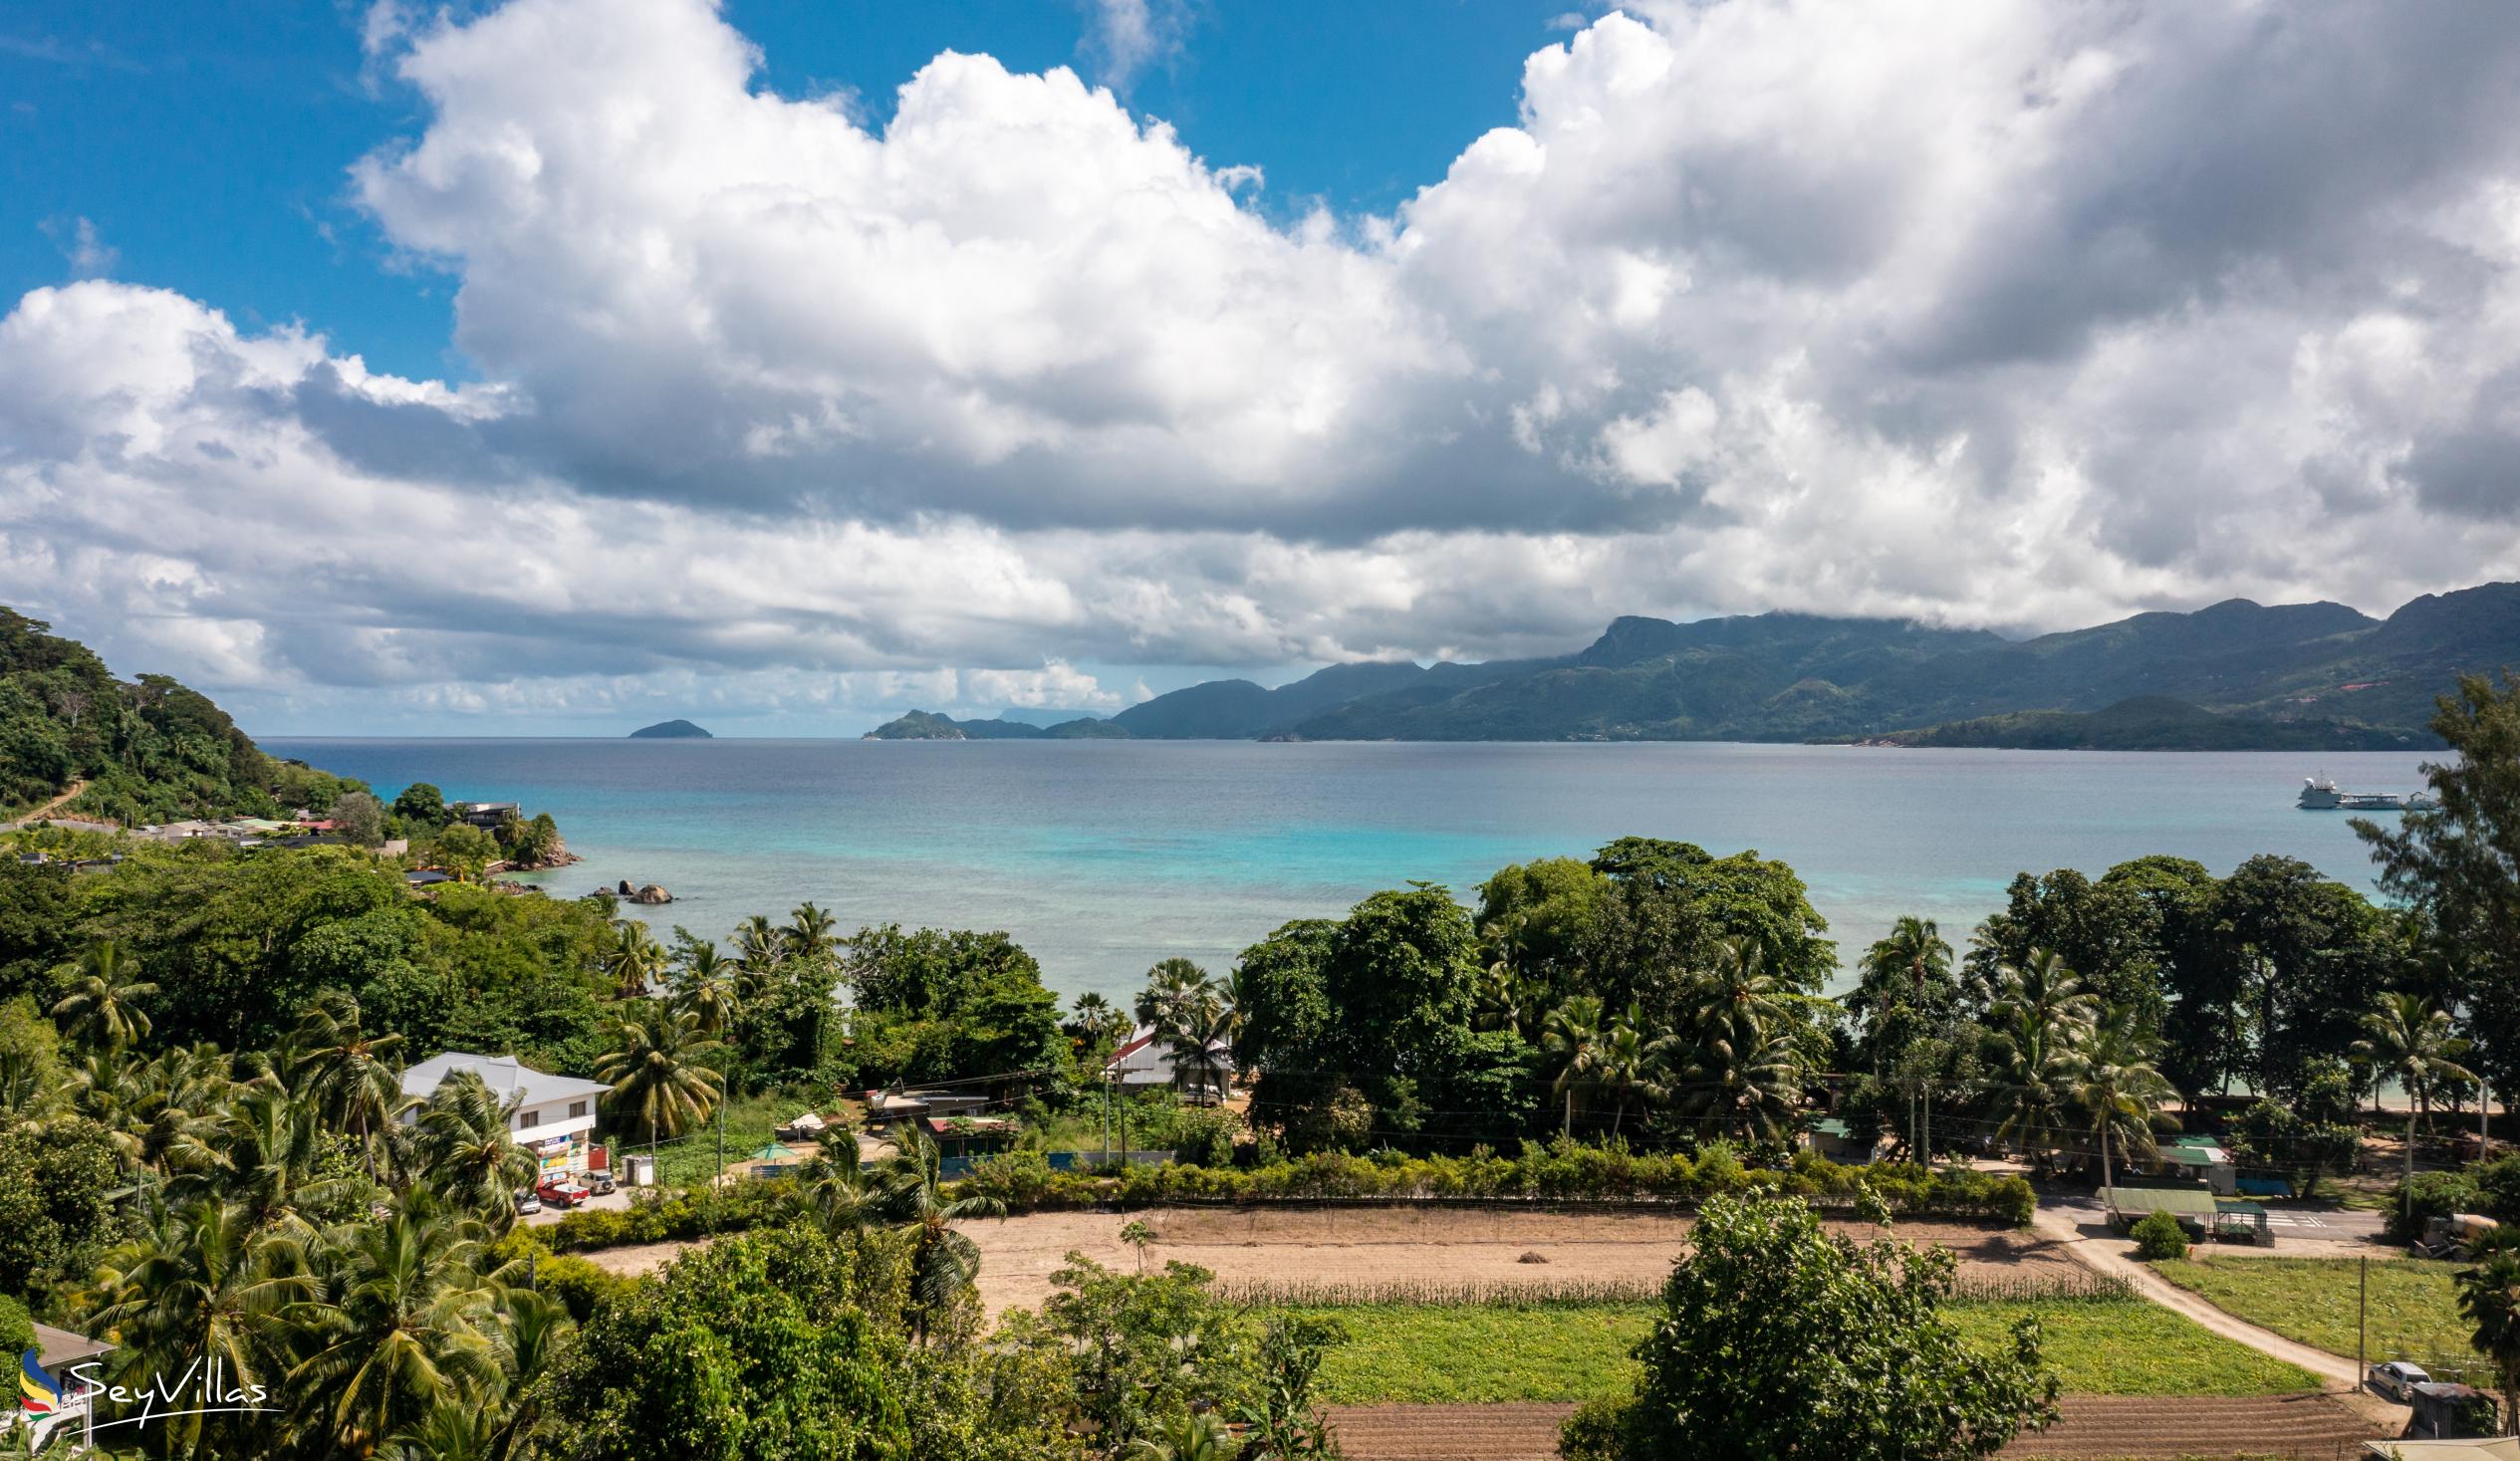 Foto 14: Paul's Residence - Posizione - Mahé (Seychelles)